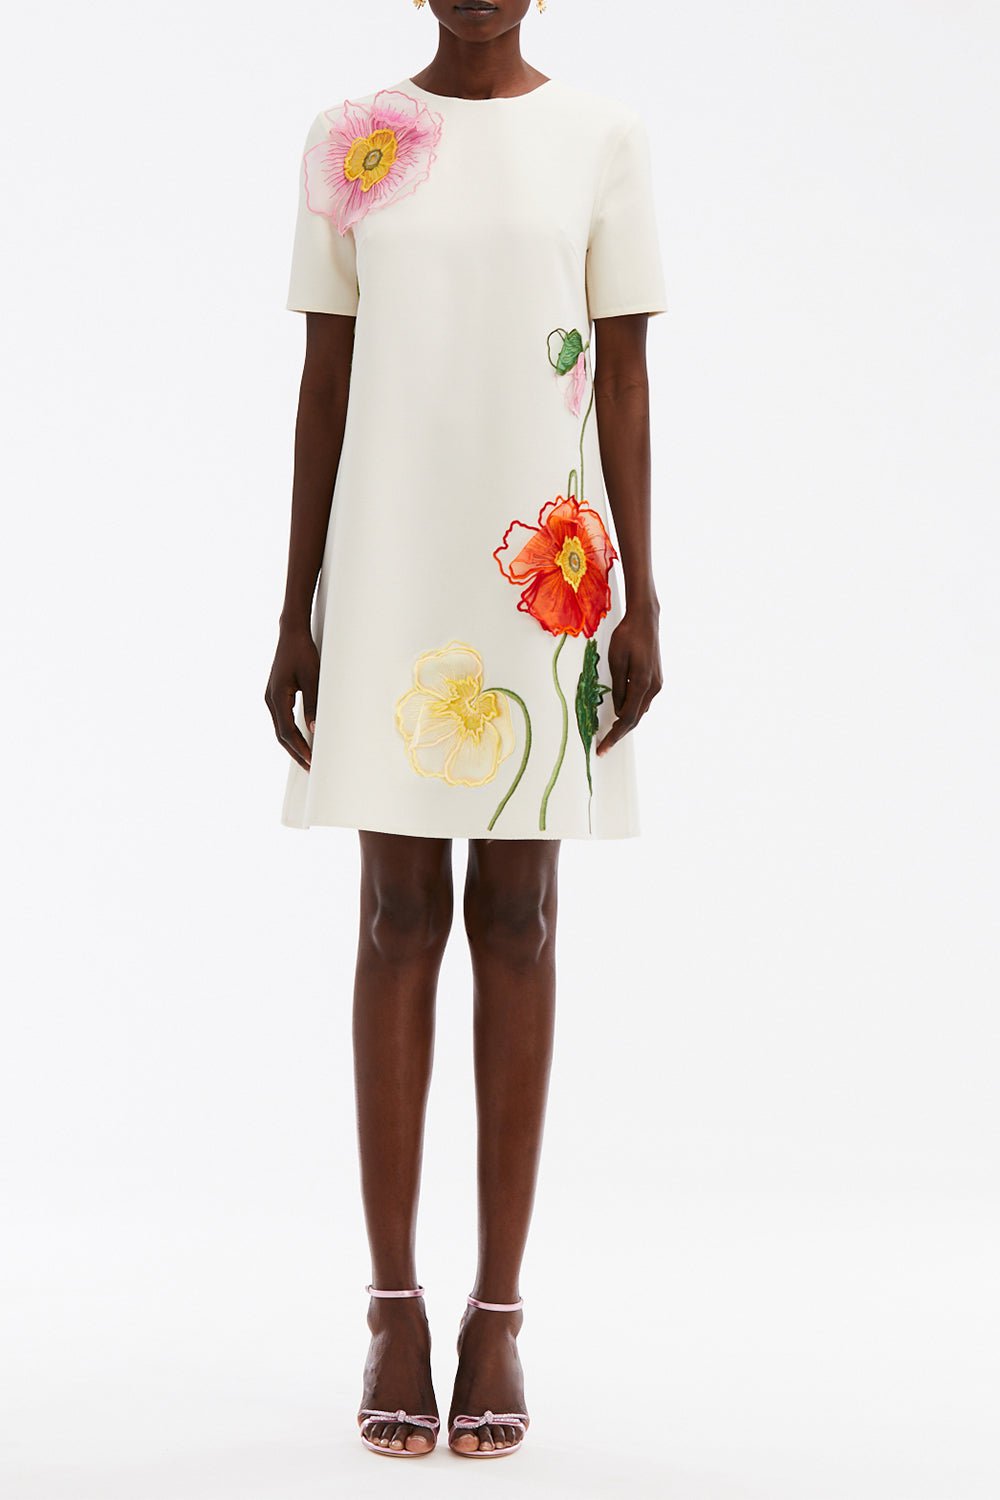 OSCAR DE LA RENTA-Painted Poppies Shift Dress - Ivory-